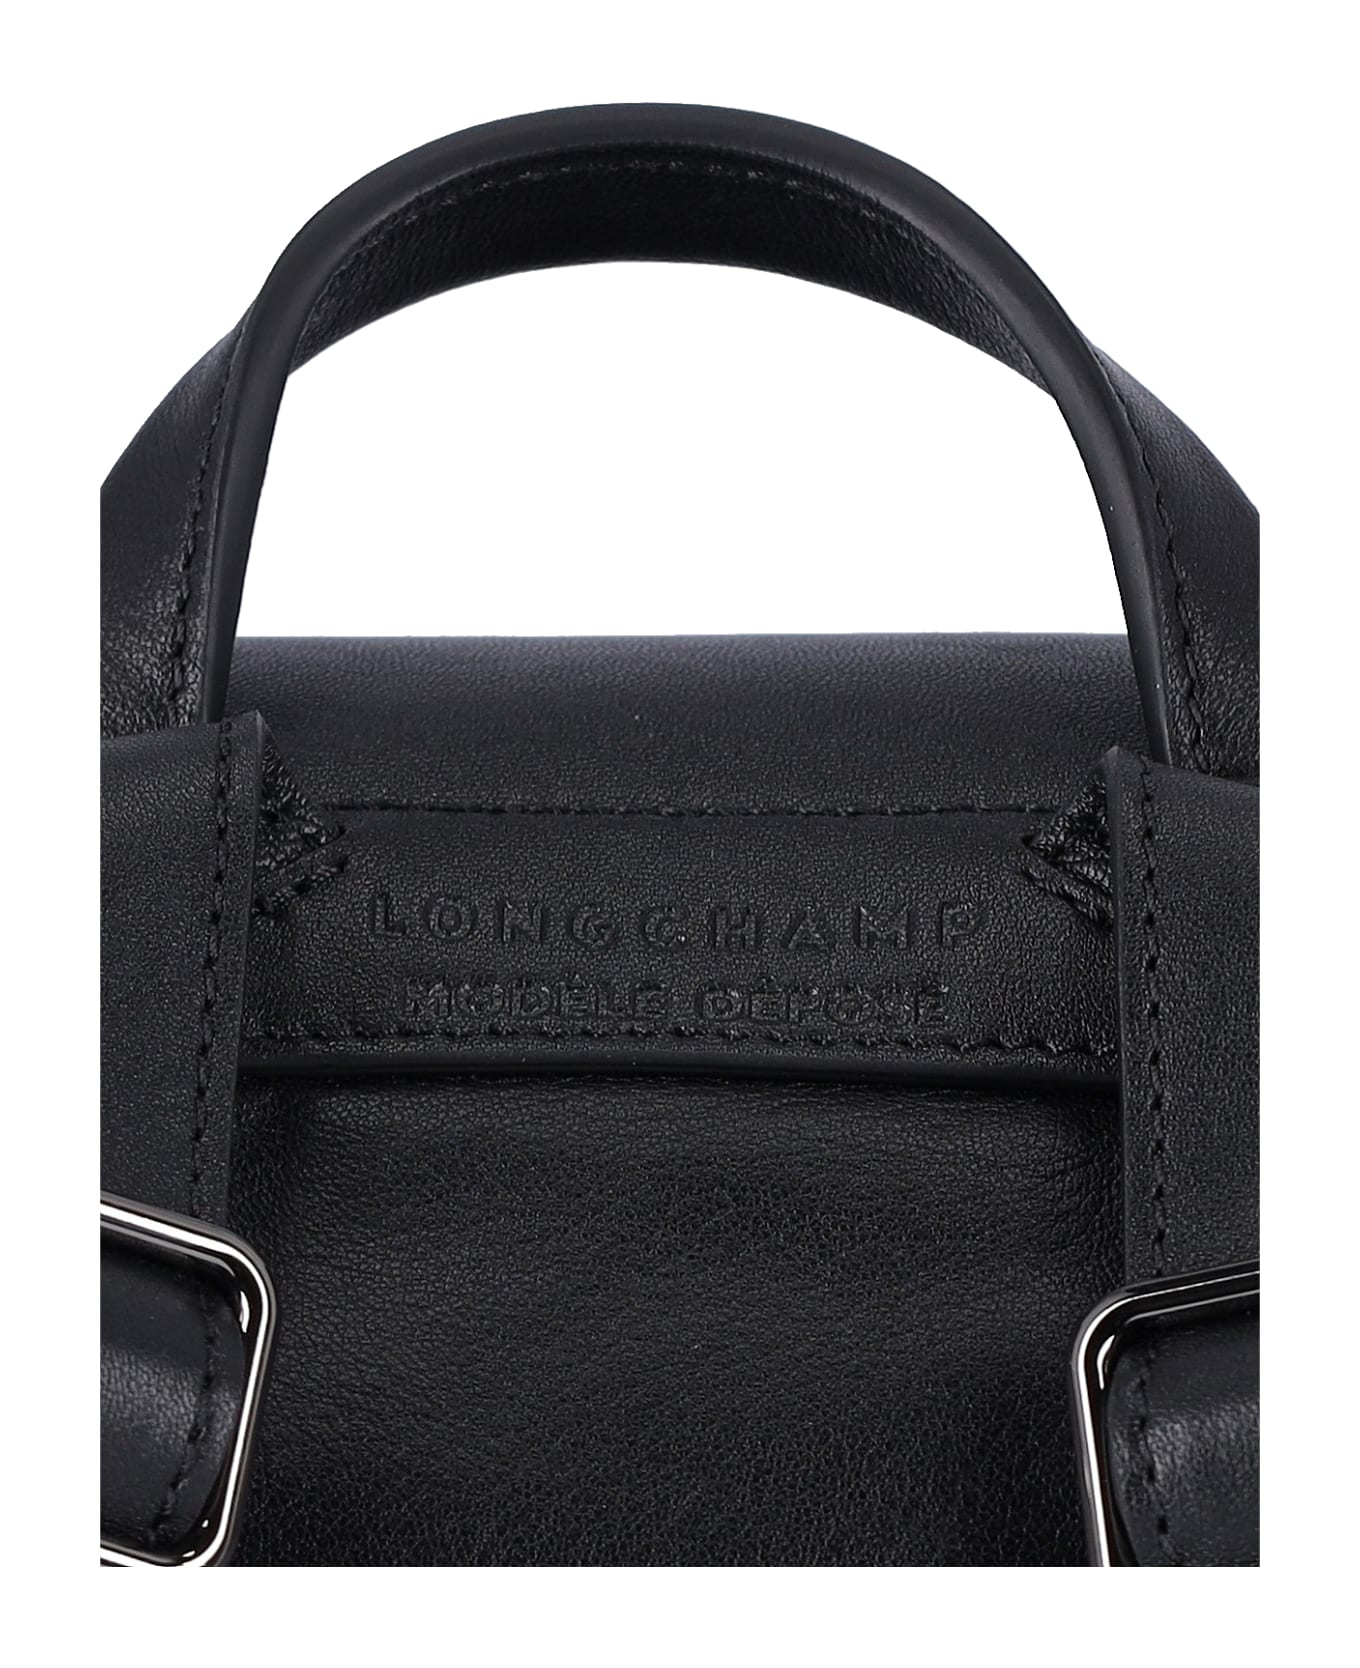 Longchamp Backpack - Black